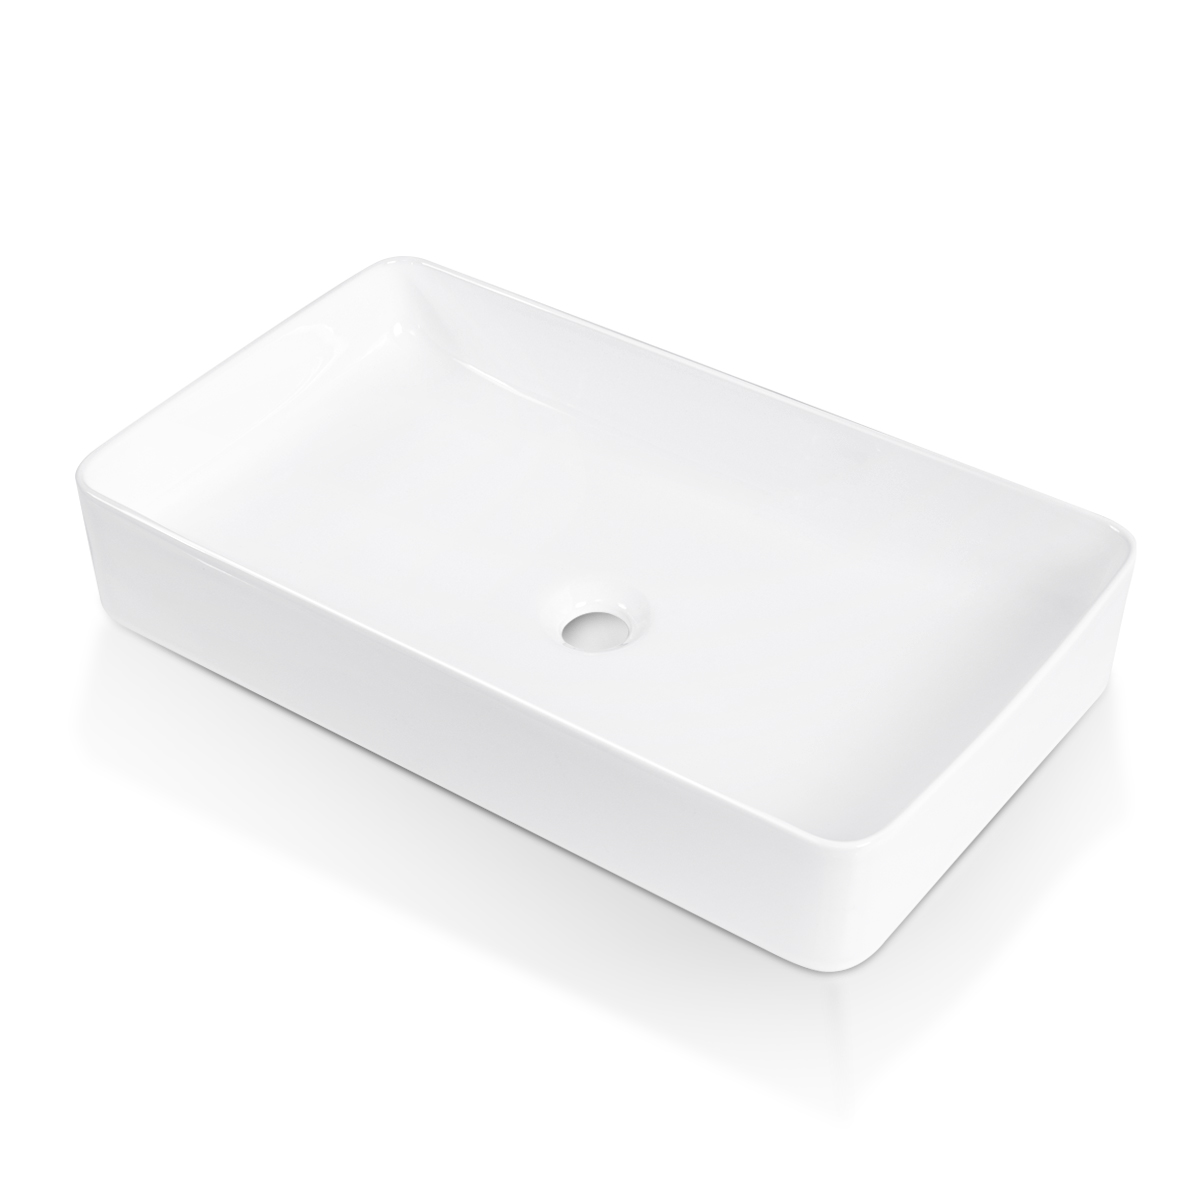 BVS2414A-OL 24" x 14" White Rectangular Ceramic Countertop Bathroom Vanity Vessel Sink